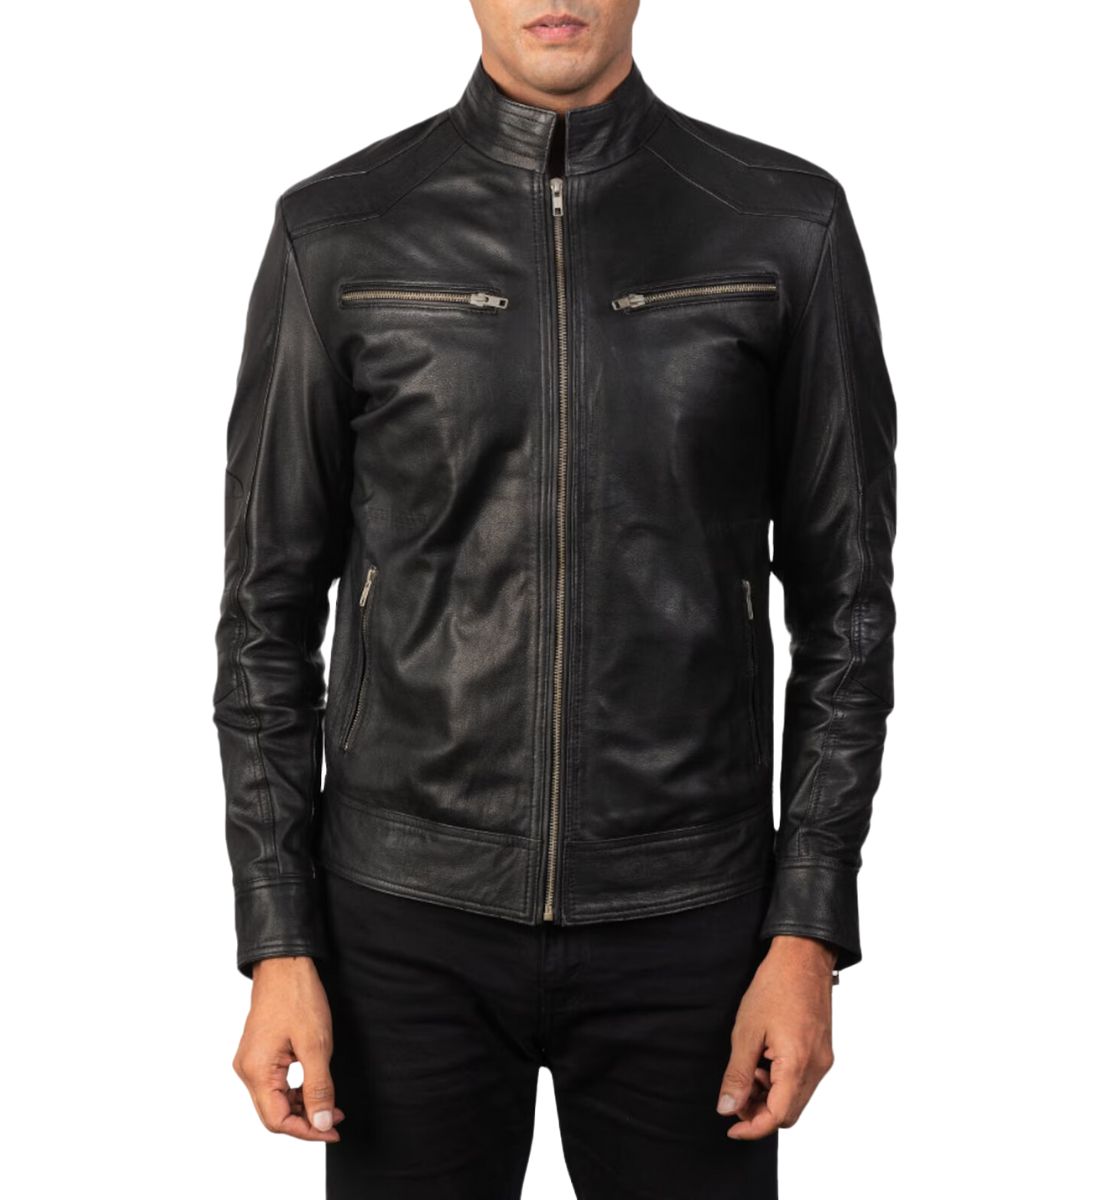 Urban Rider's Black Zippered Jacket